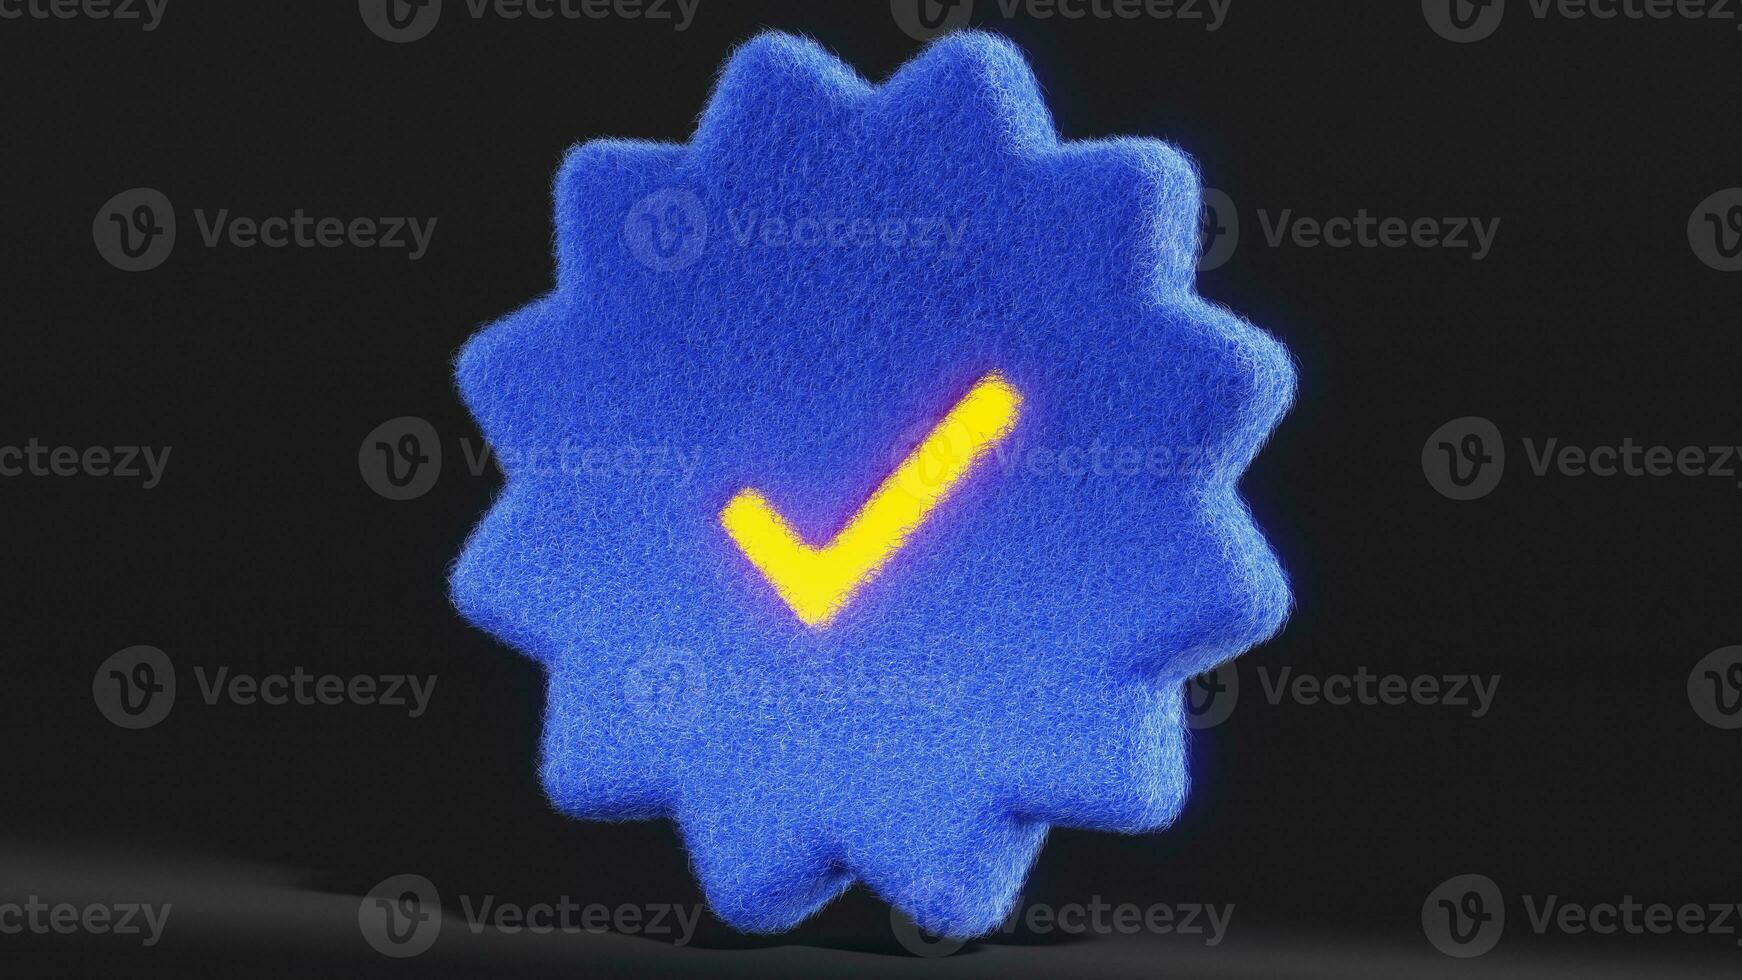 neoplush verifiering emblem foto